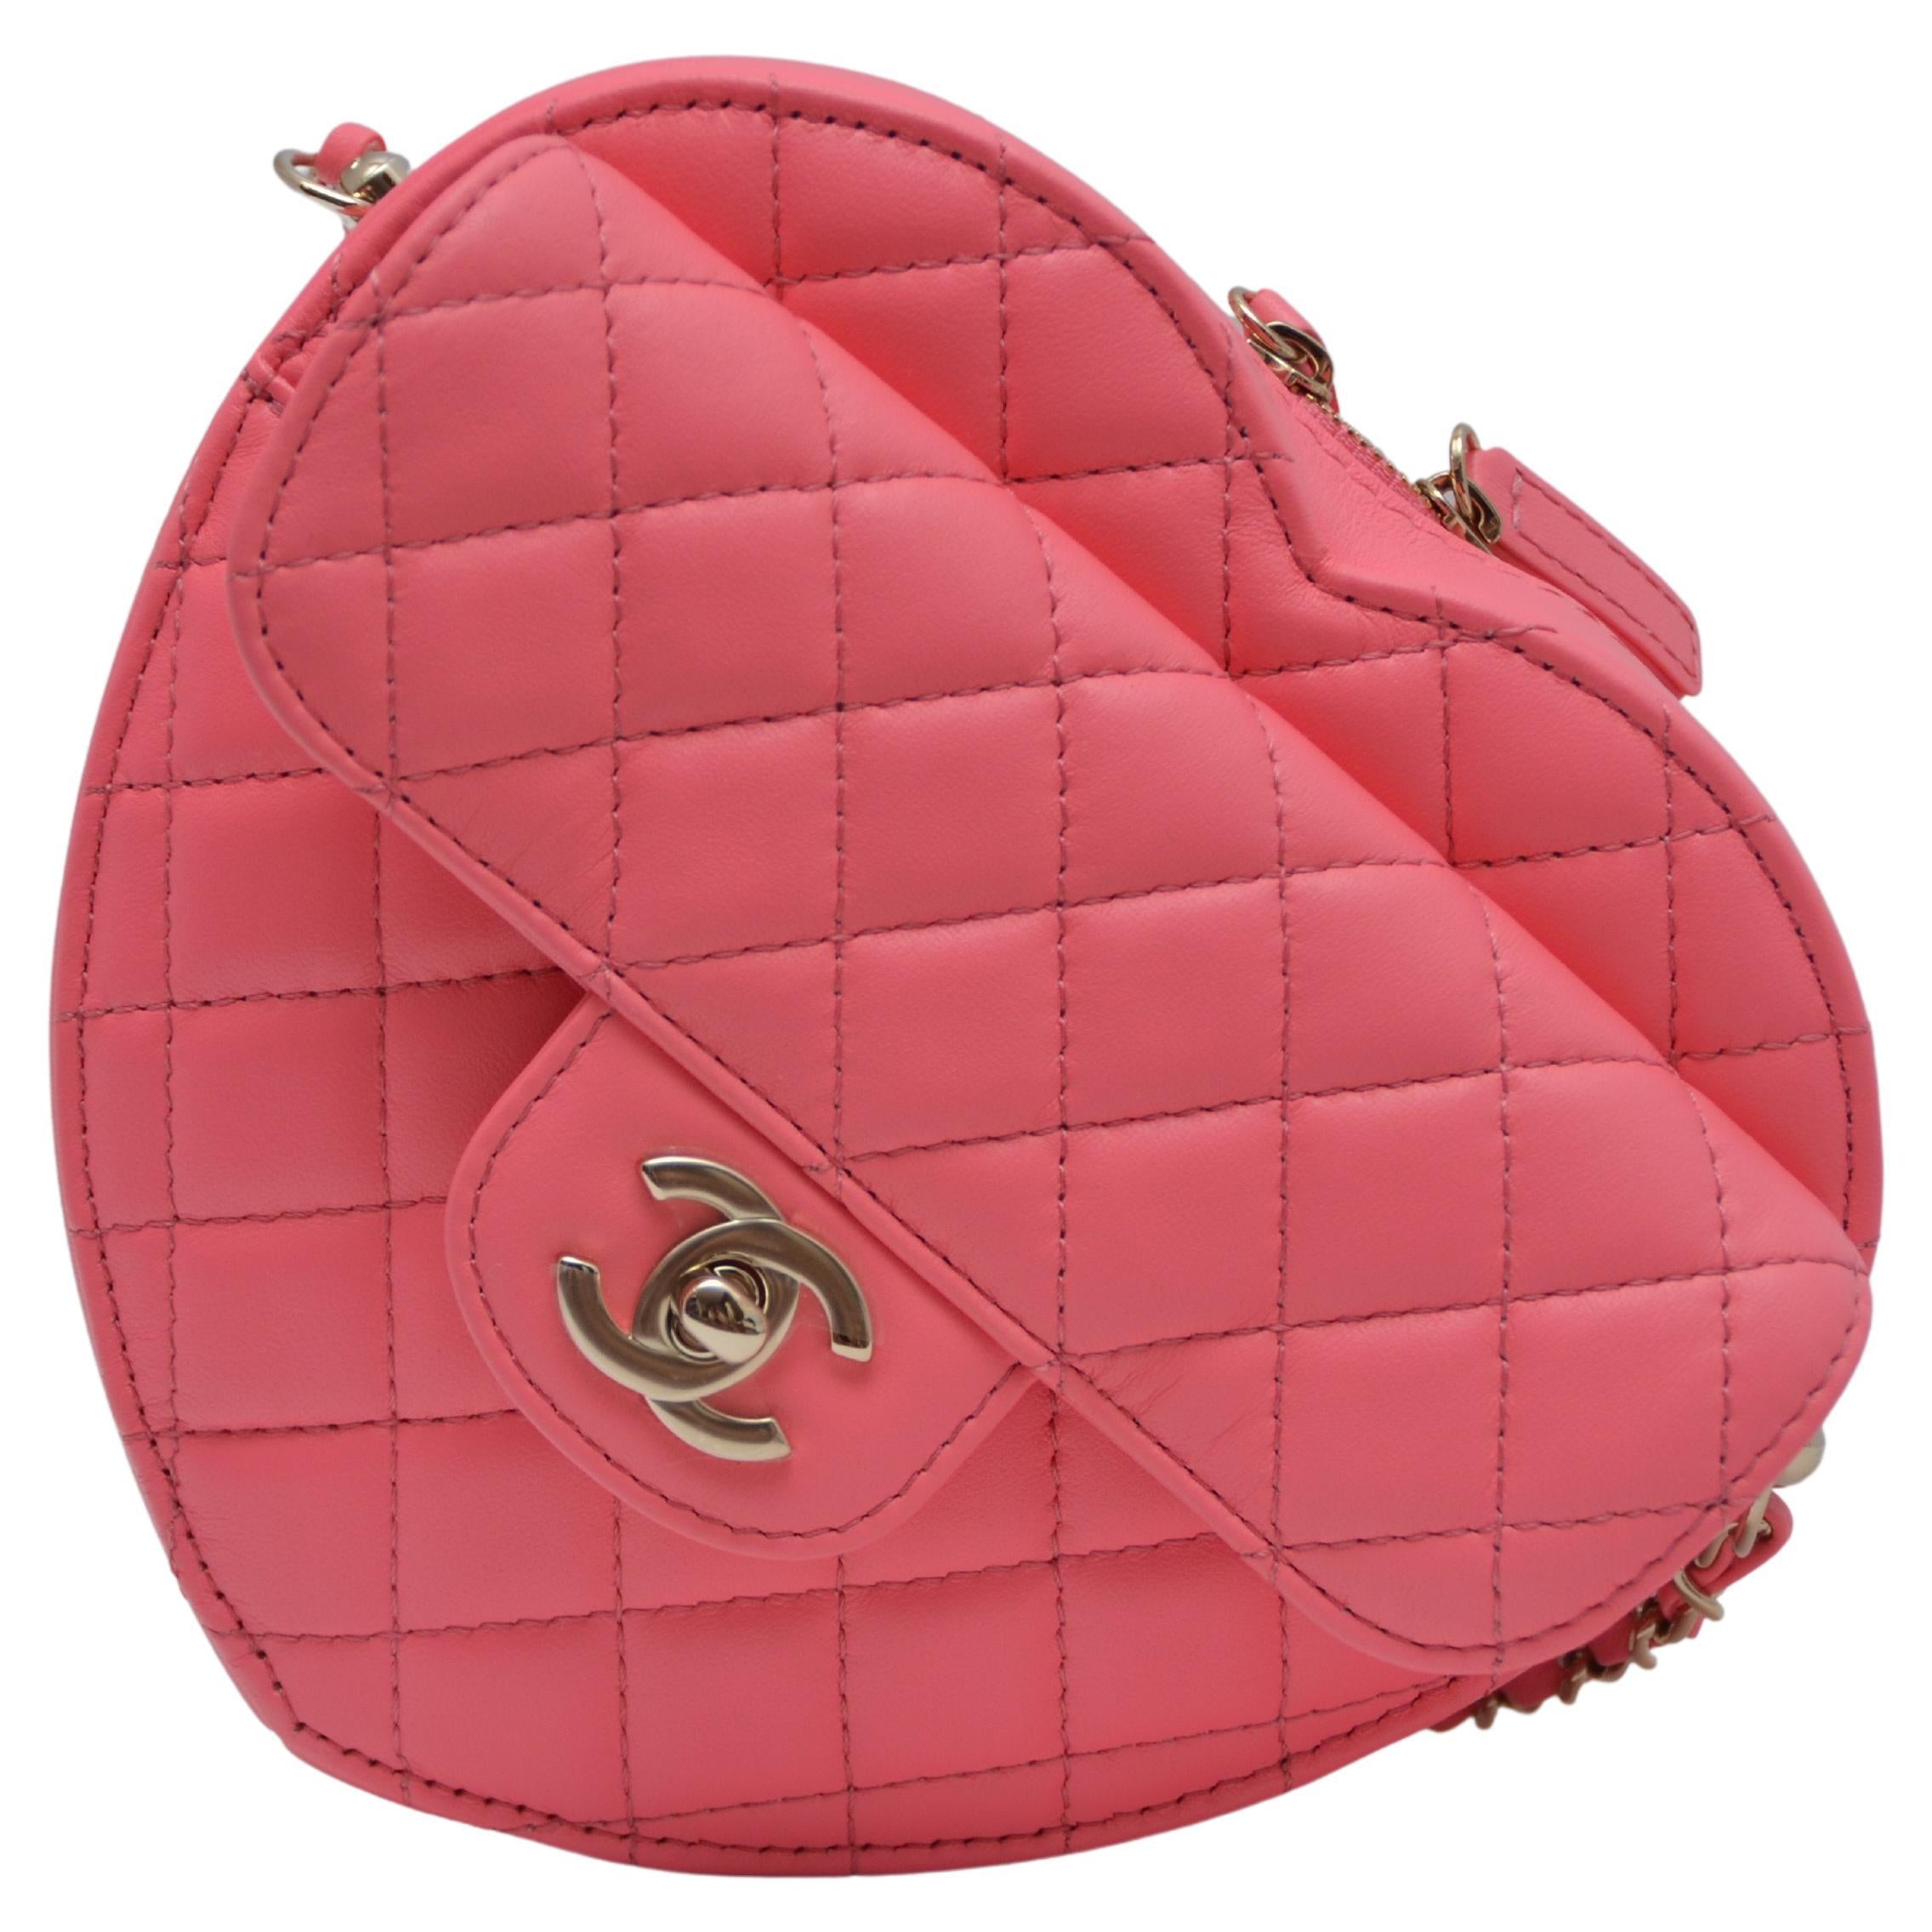 CHANEL '22 RUNWAY Large Lambskin Pink Heart Bag Handbag NEW With